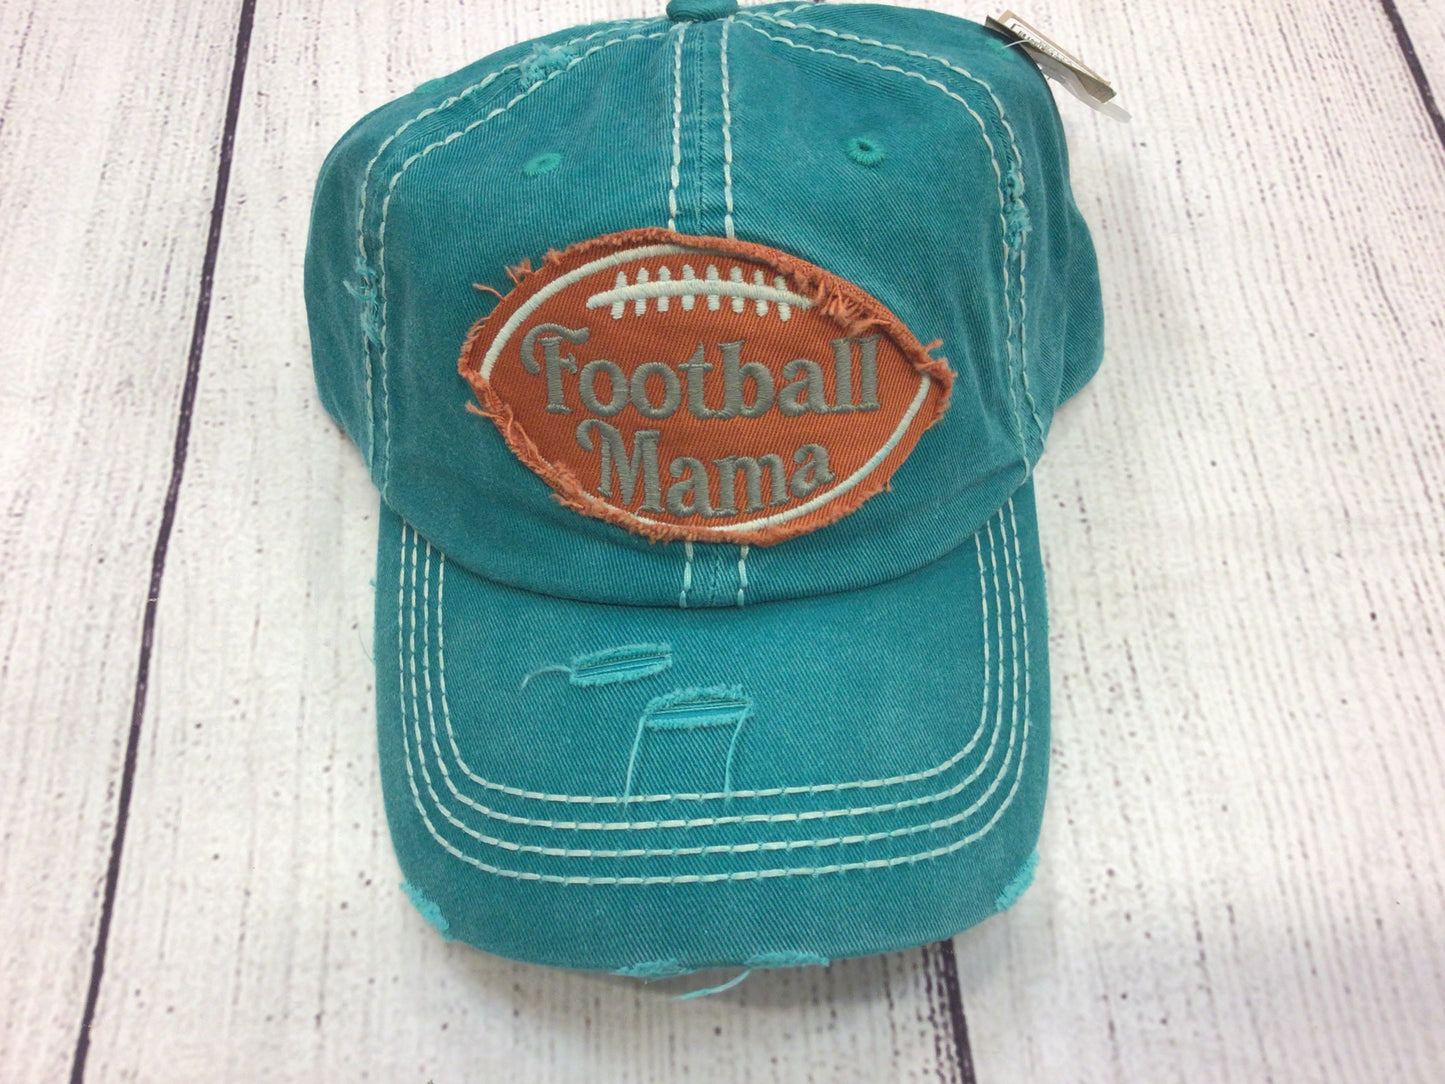 Football Mama Hat